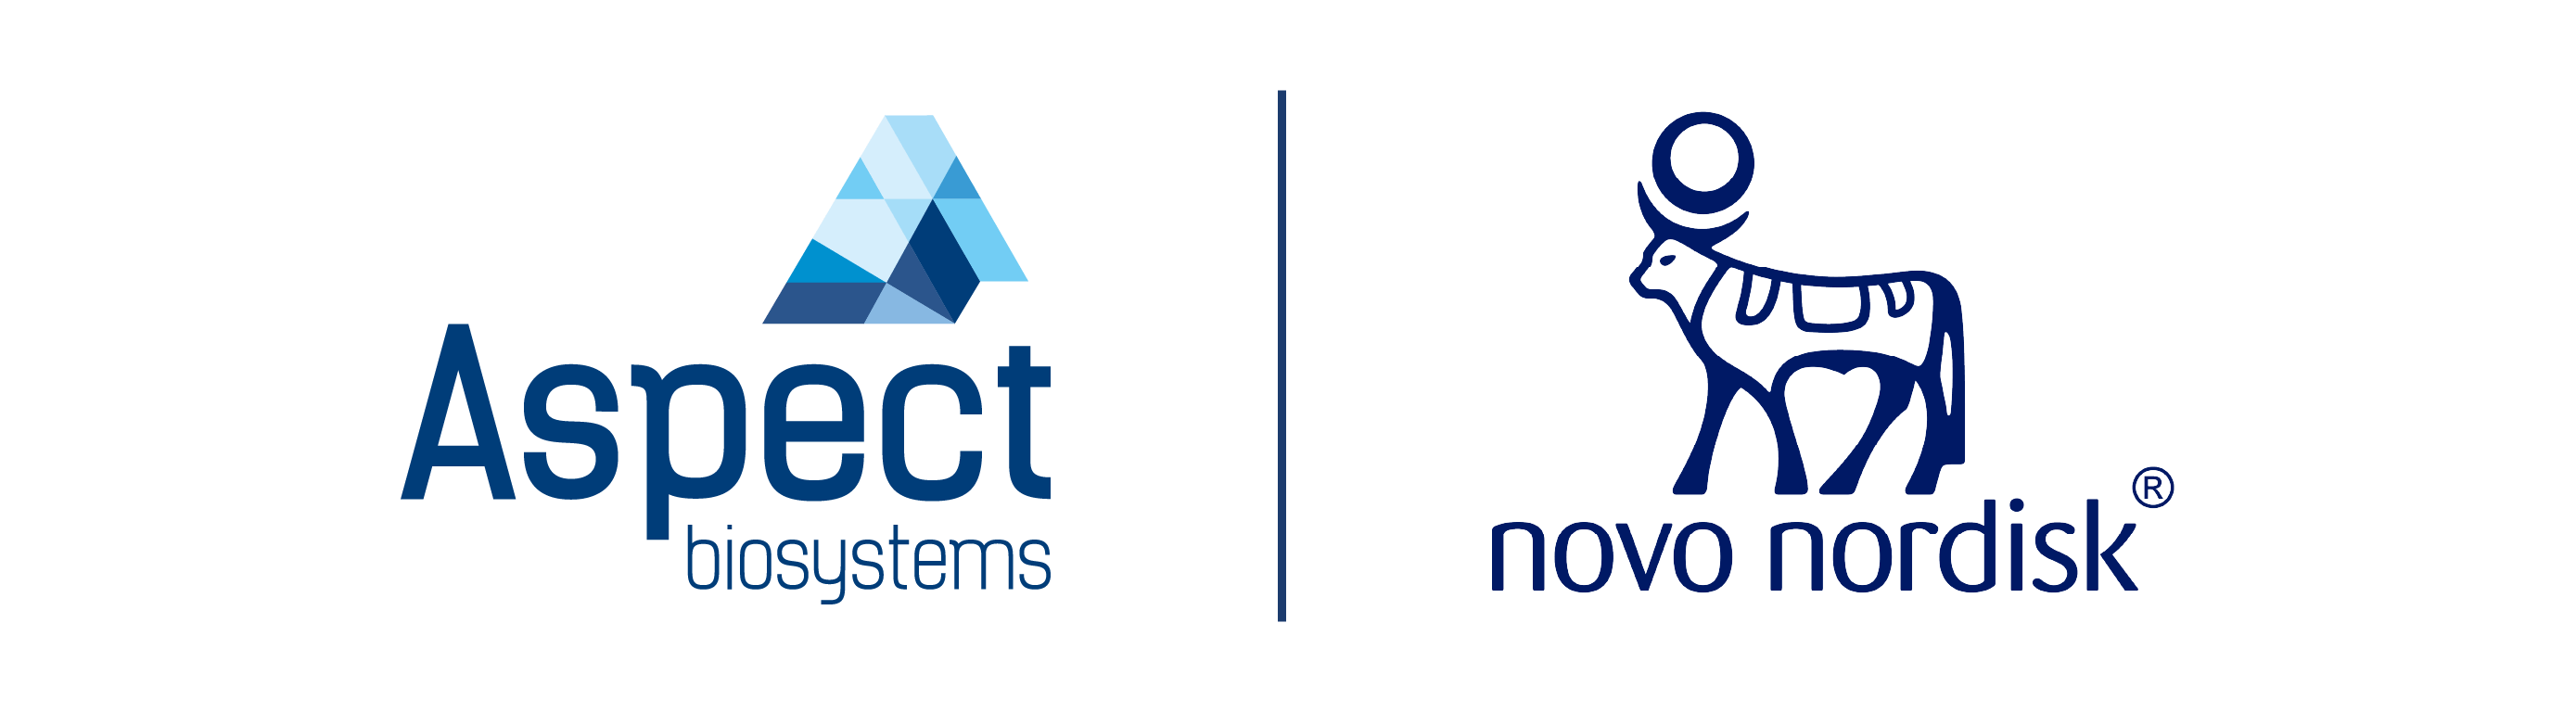 Aspect's and Novo Nordisk's logos